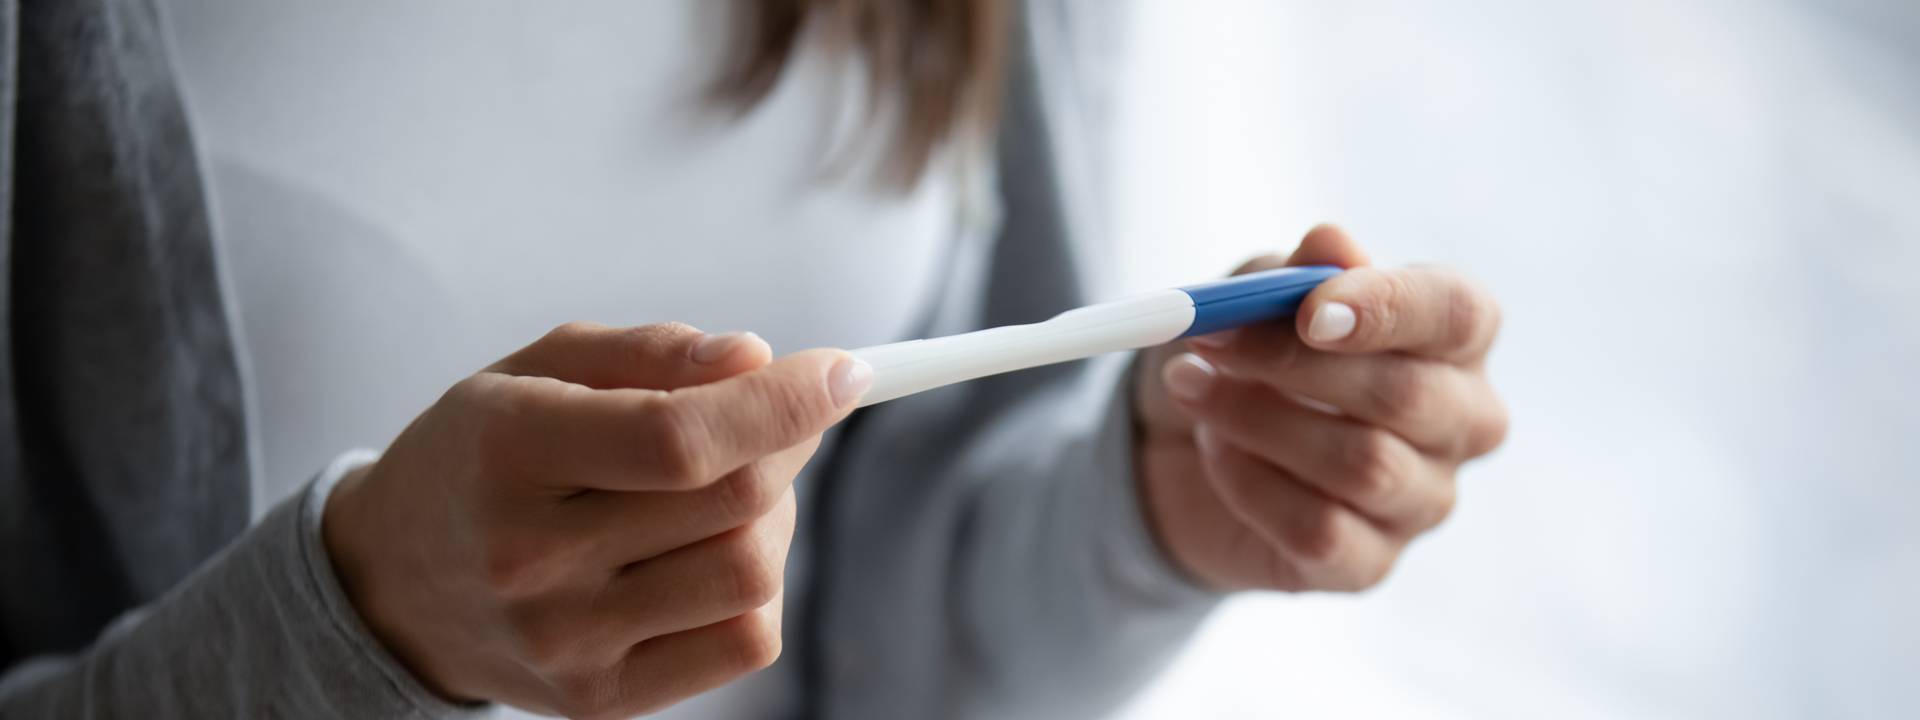 Ab wann kann man einen Schwangerschaftstest machen?